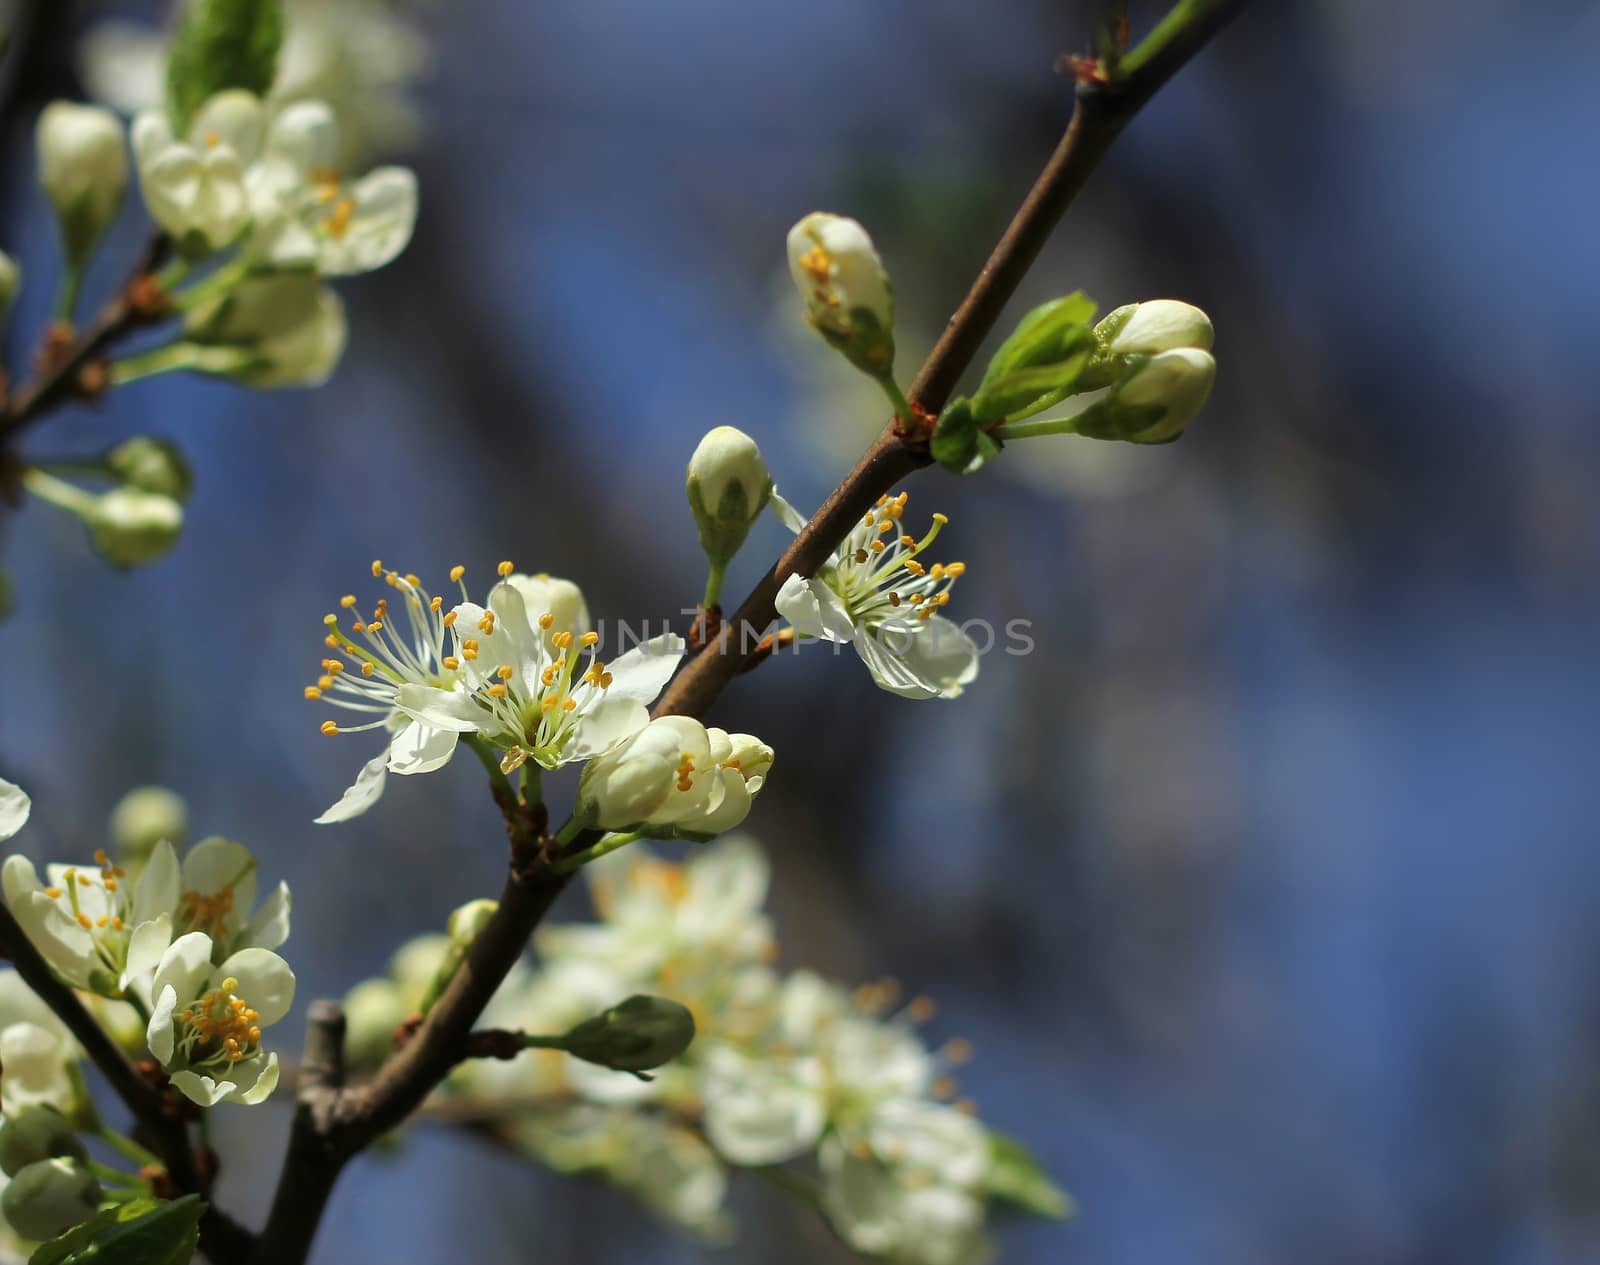 White plum tree blossoms, spring season concept